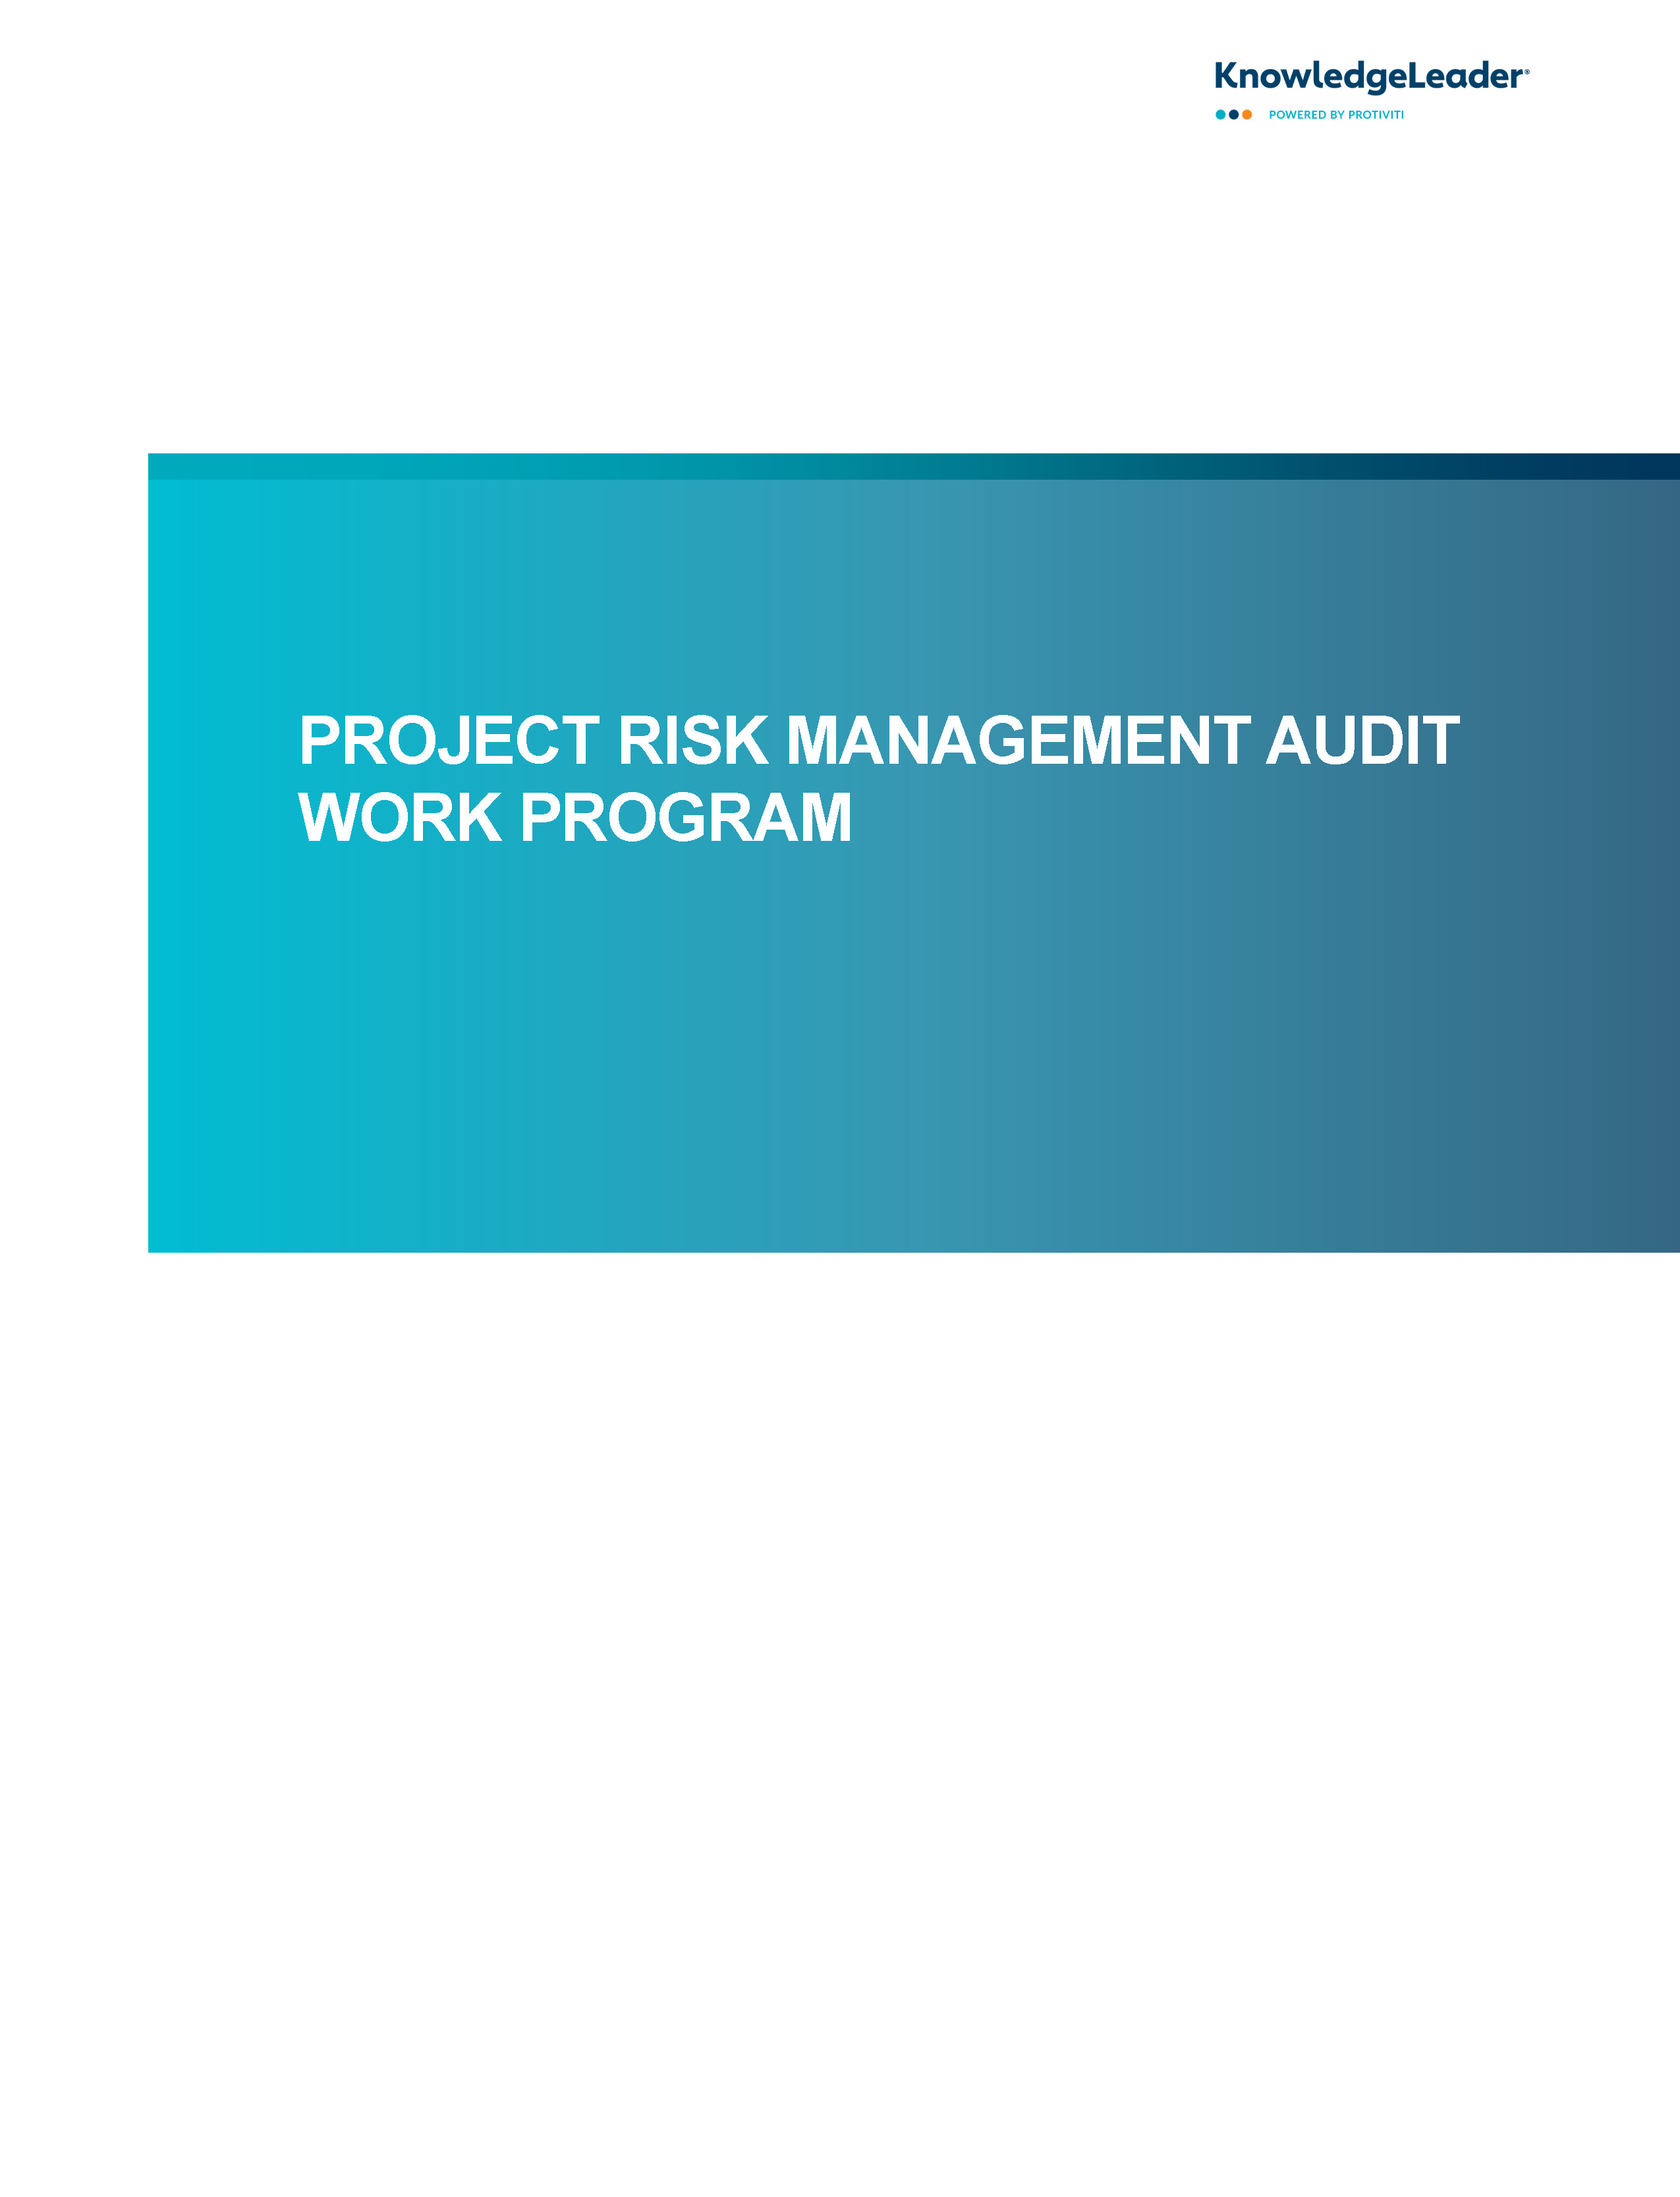 Project Risk Management Audit Work Program